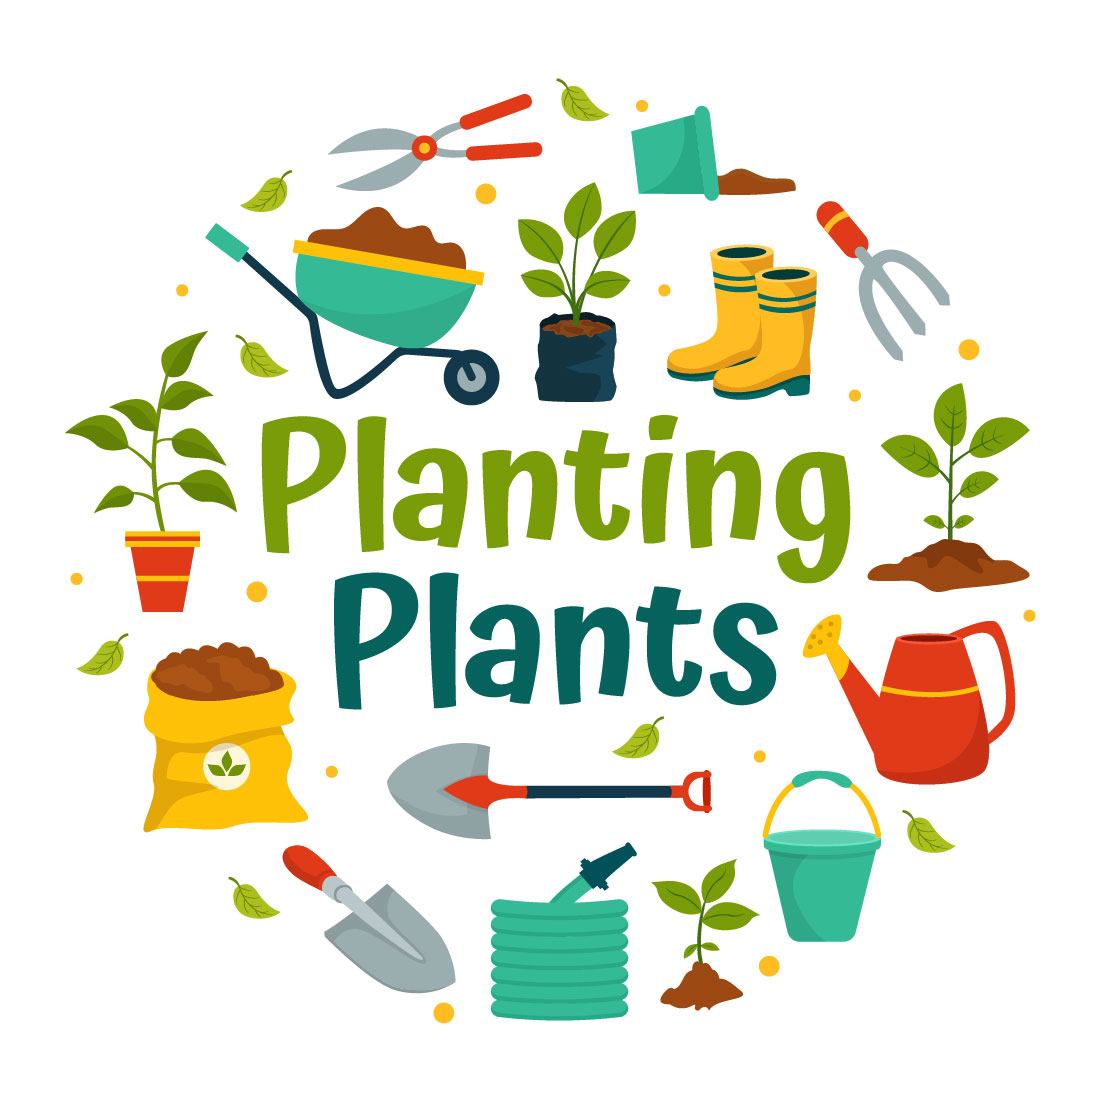 12 Planting Plants Illustration preview image.